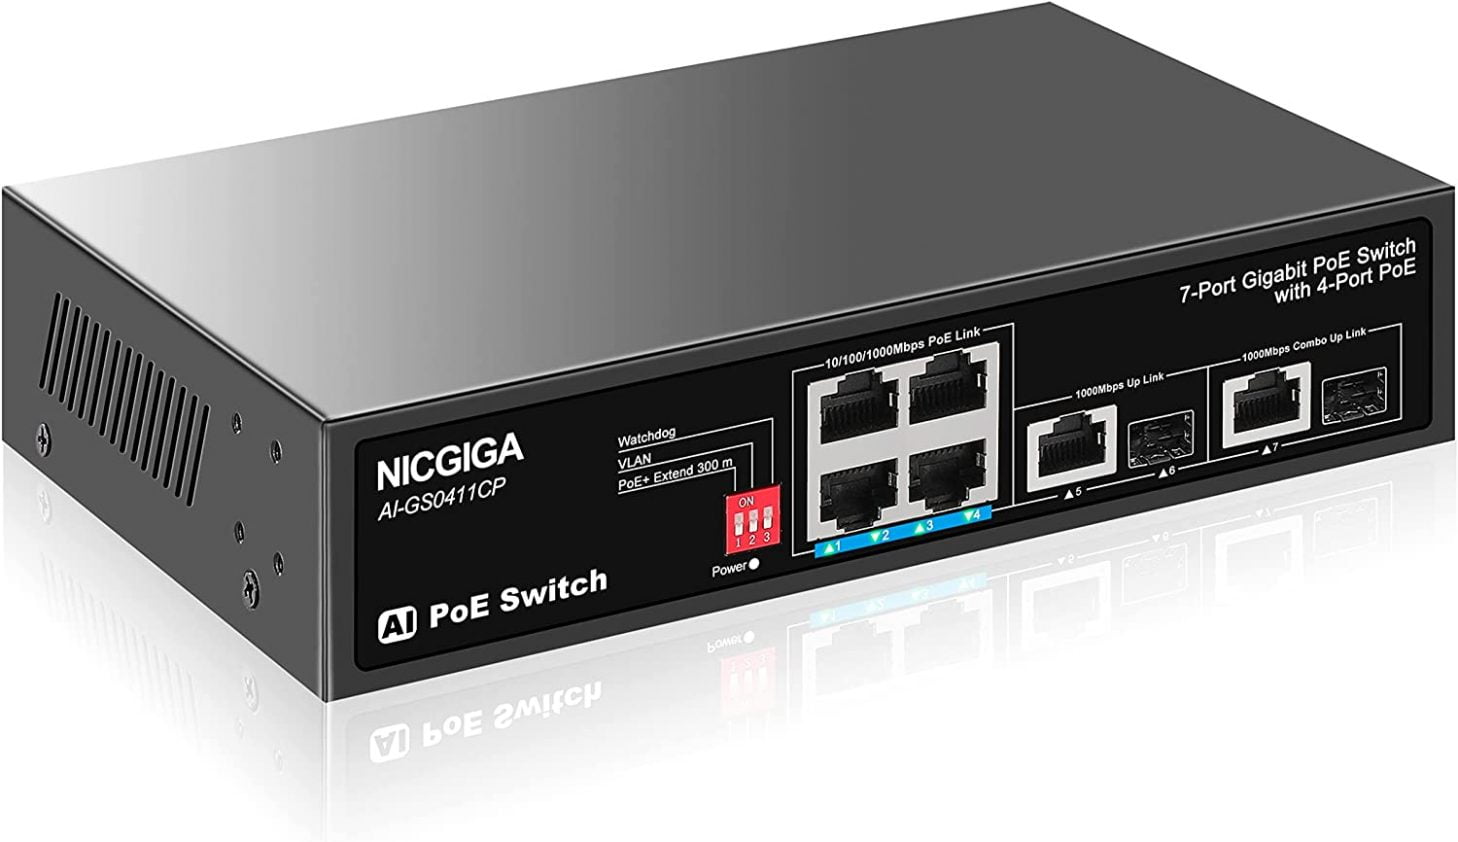 NICGIGA 7 Port SFP Switch